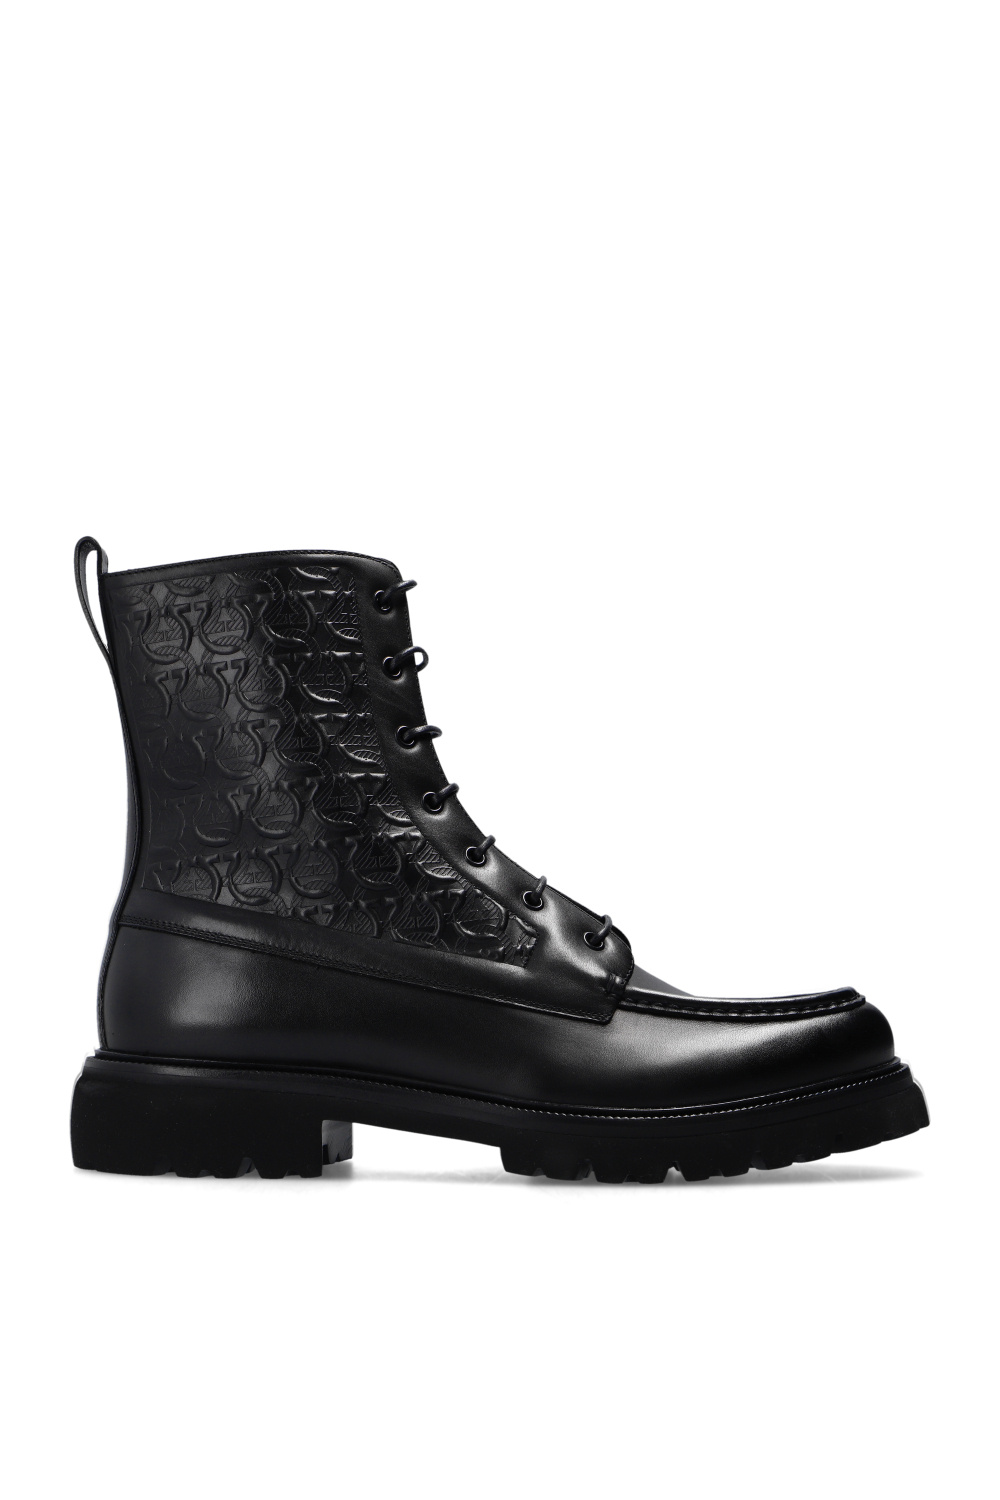 Salvatore Ferragamo ‘Naval 2’ leather ankle boots